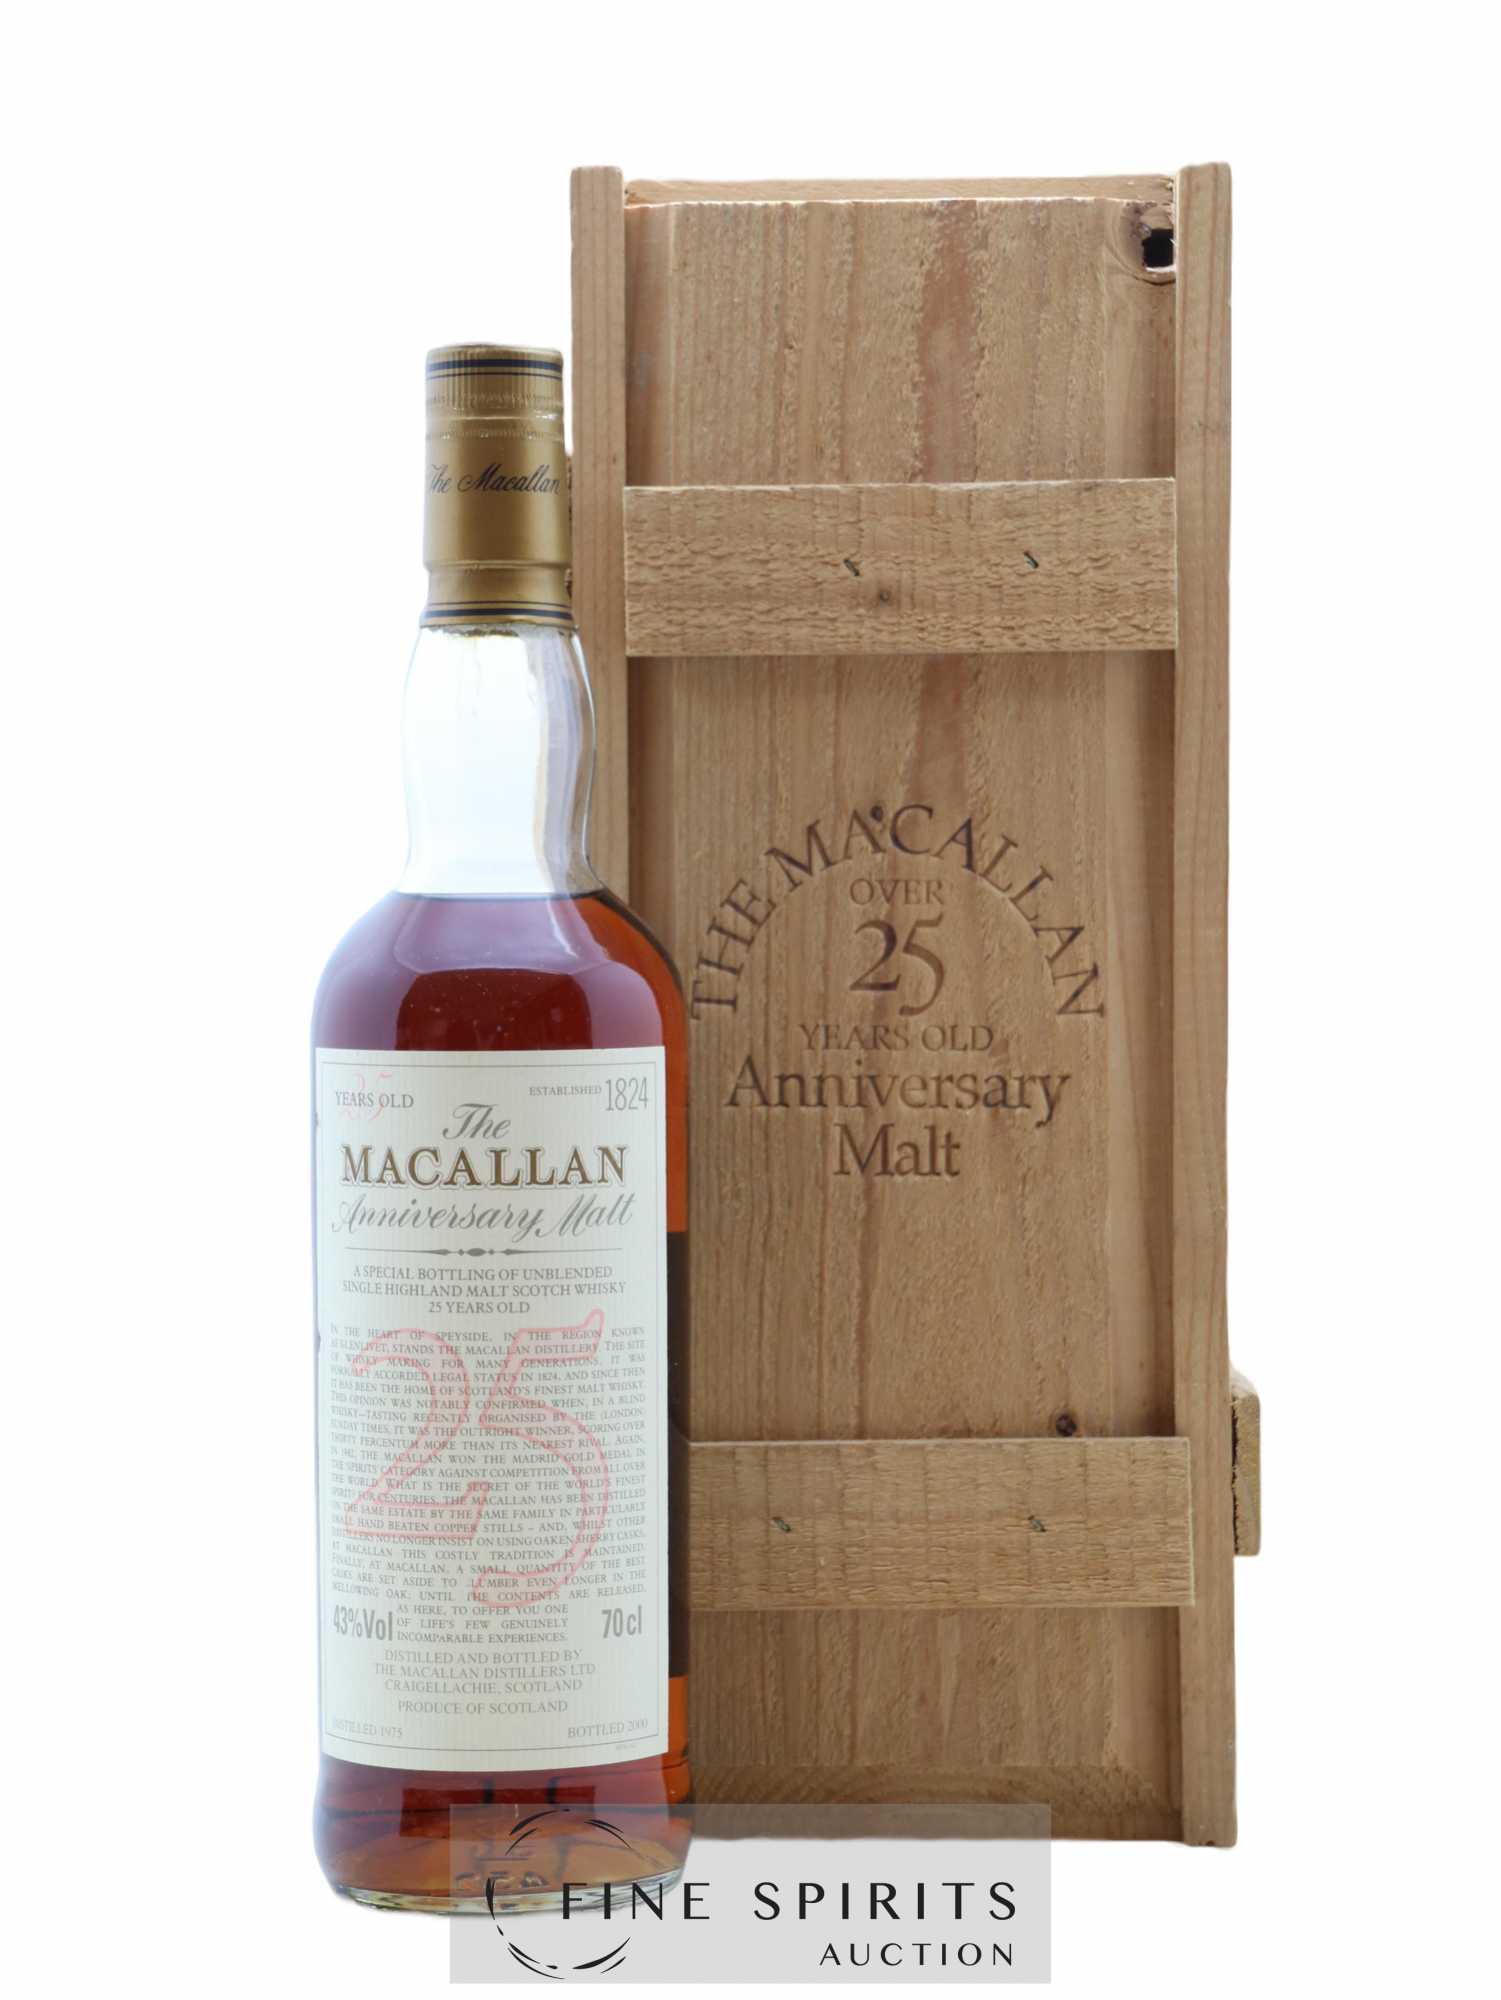 Macallan (The) 25 years 1975 Of. Anniversary Malt bottled 2000 Special Bottling 